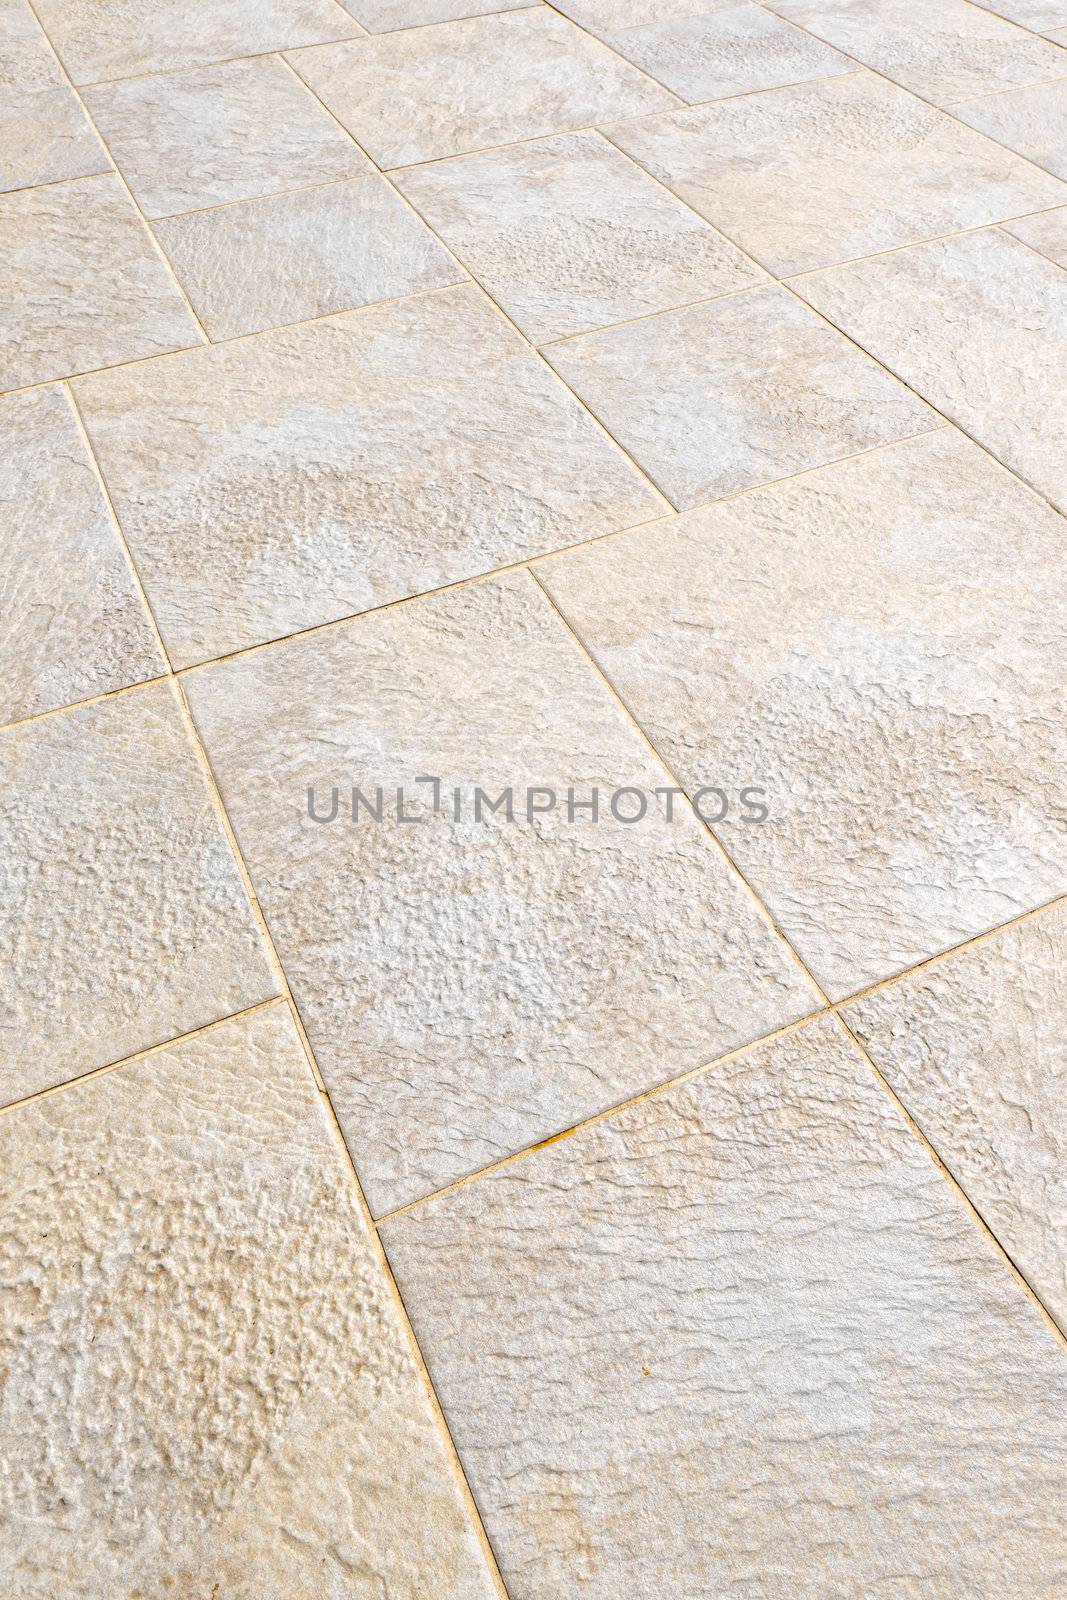 Ceramic tile flooring close up as background